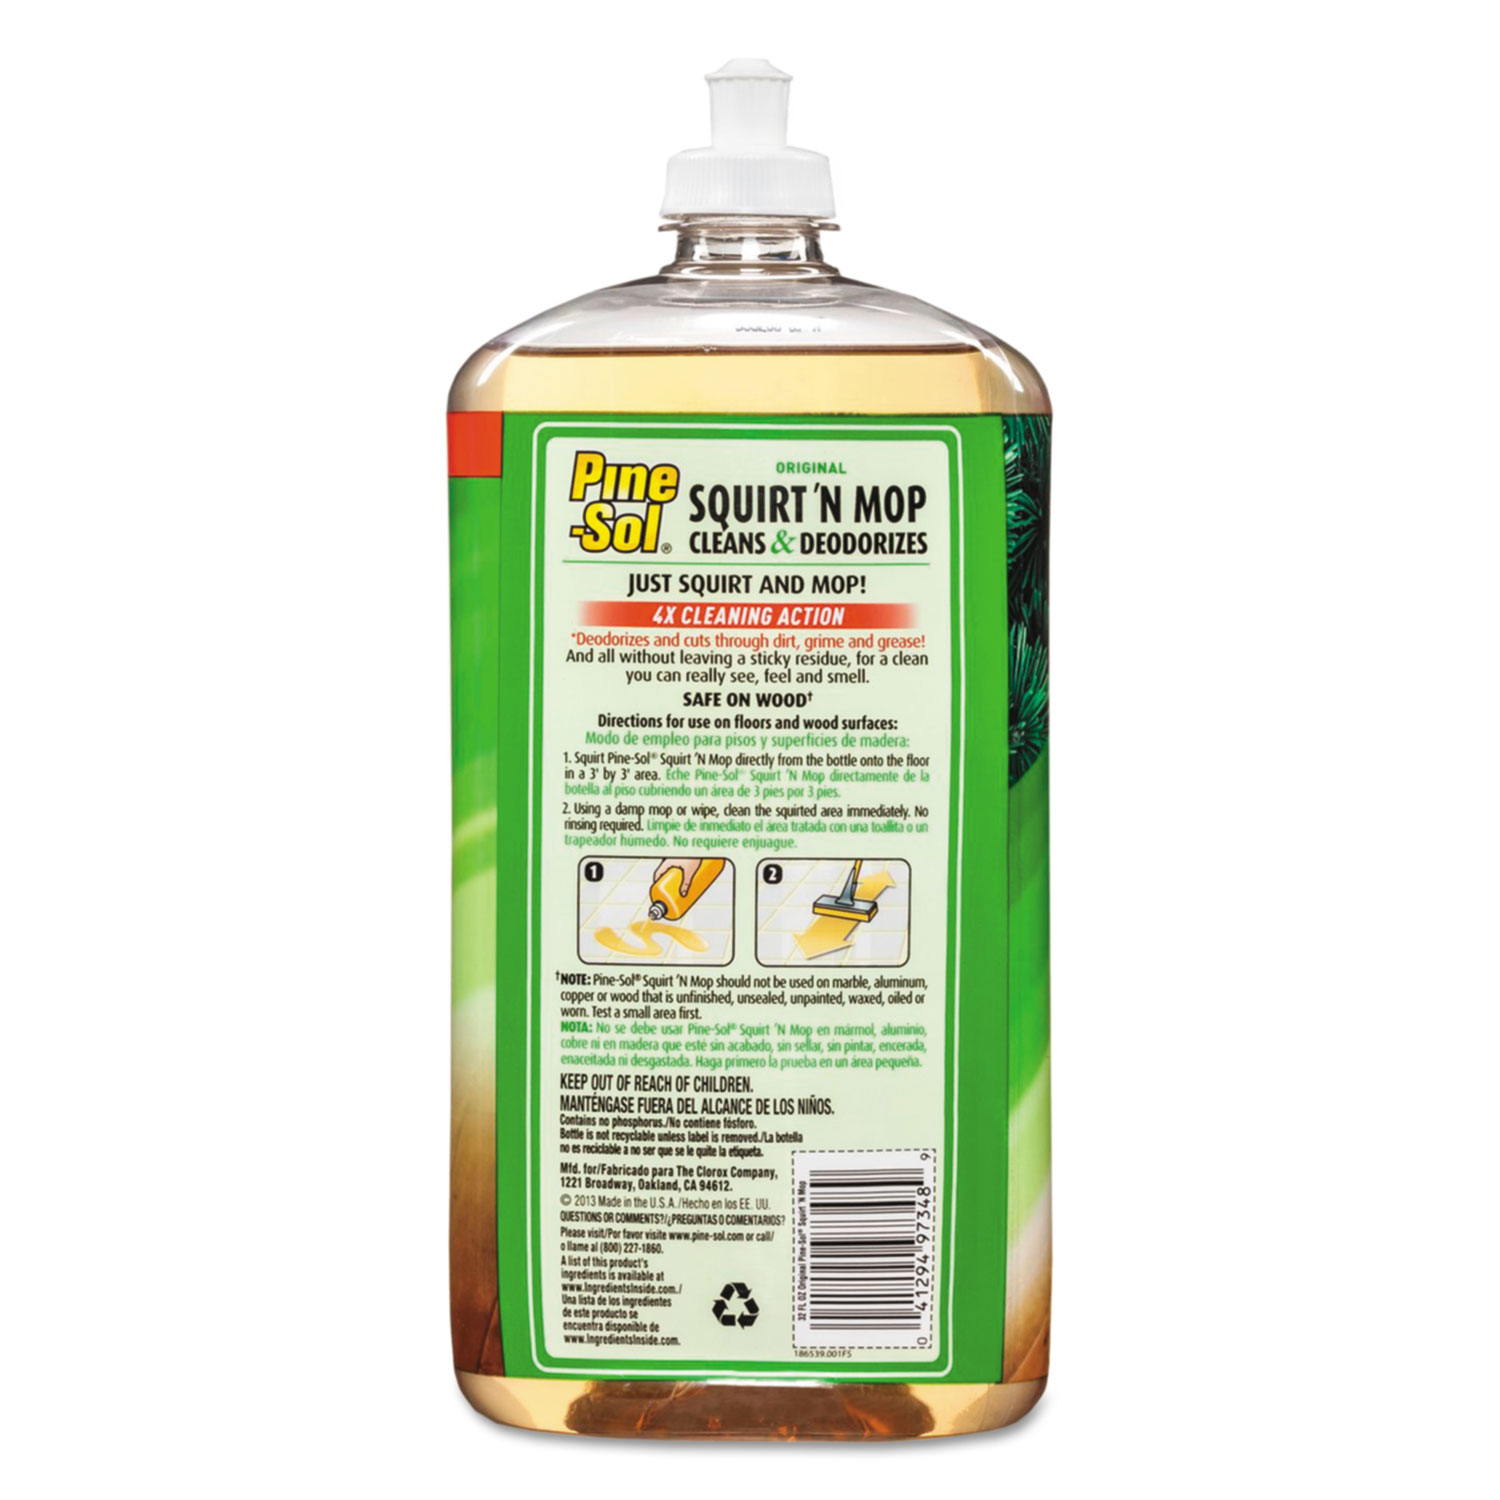 Squirt 'n Mop Multi-Surface Floor Cleaner, 32 oz Bottle, Original Scent